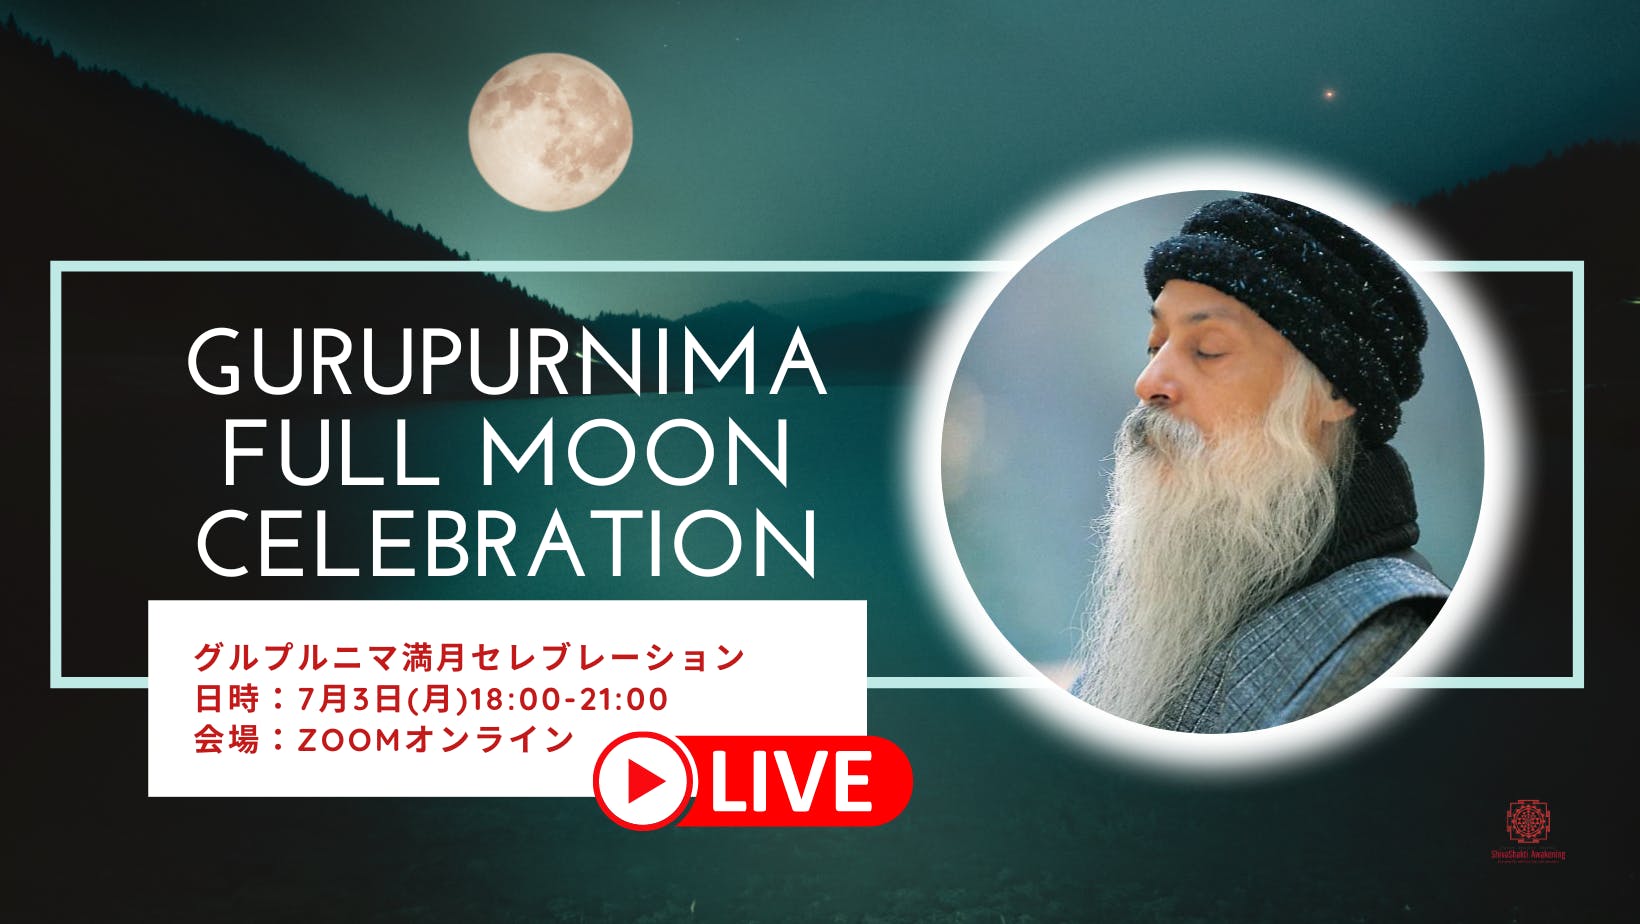 Gurupurnima Full Moon Celebration